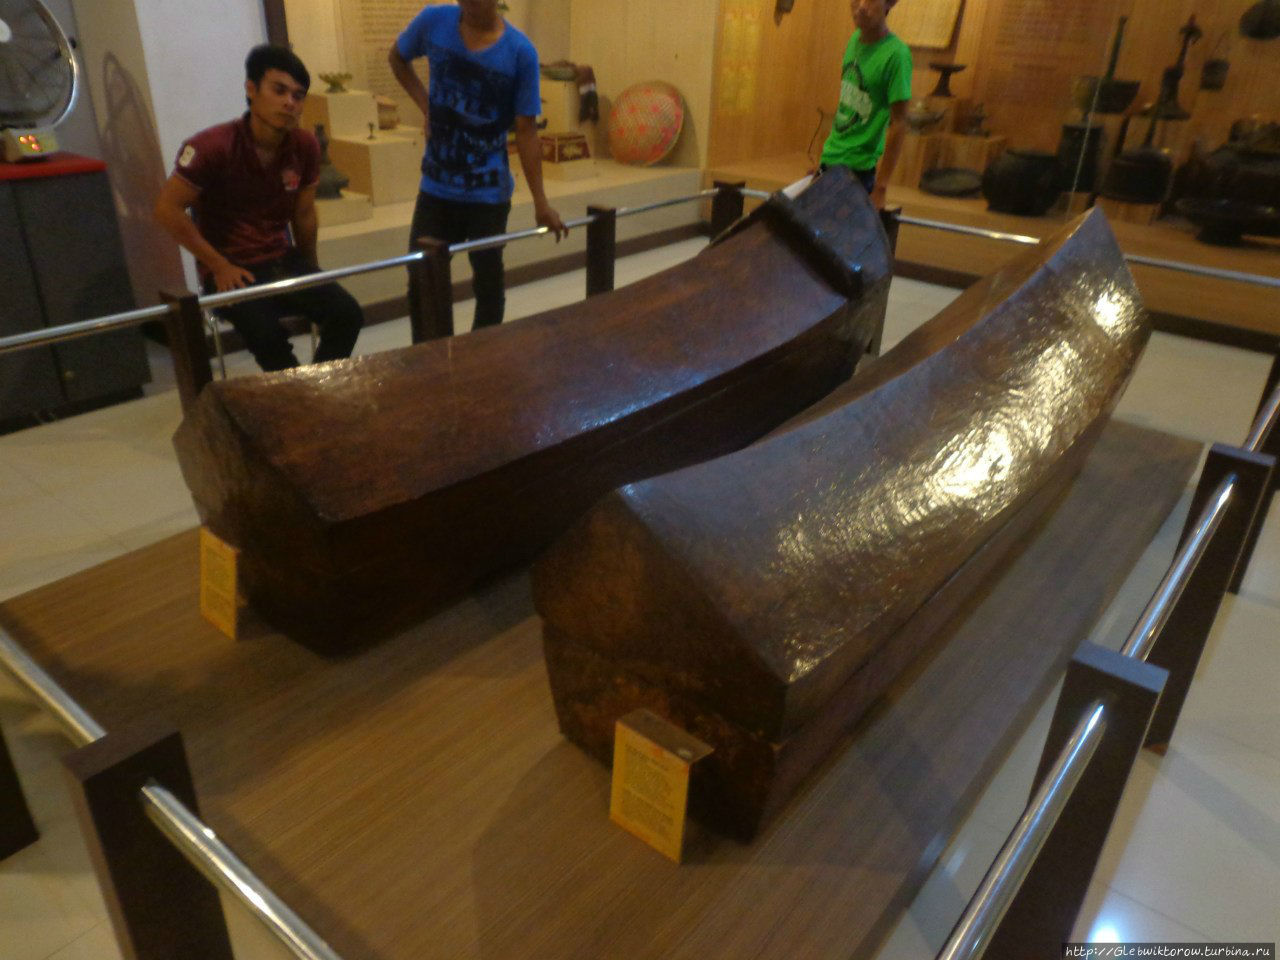 Музей Суматра Утара Медан, Индонезия